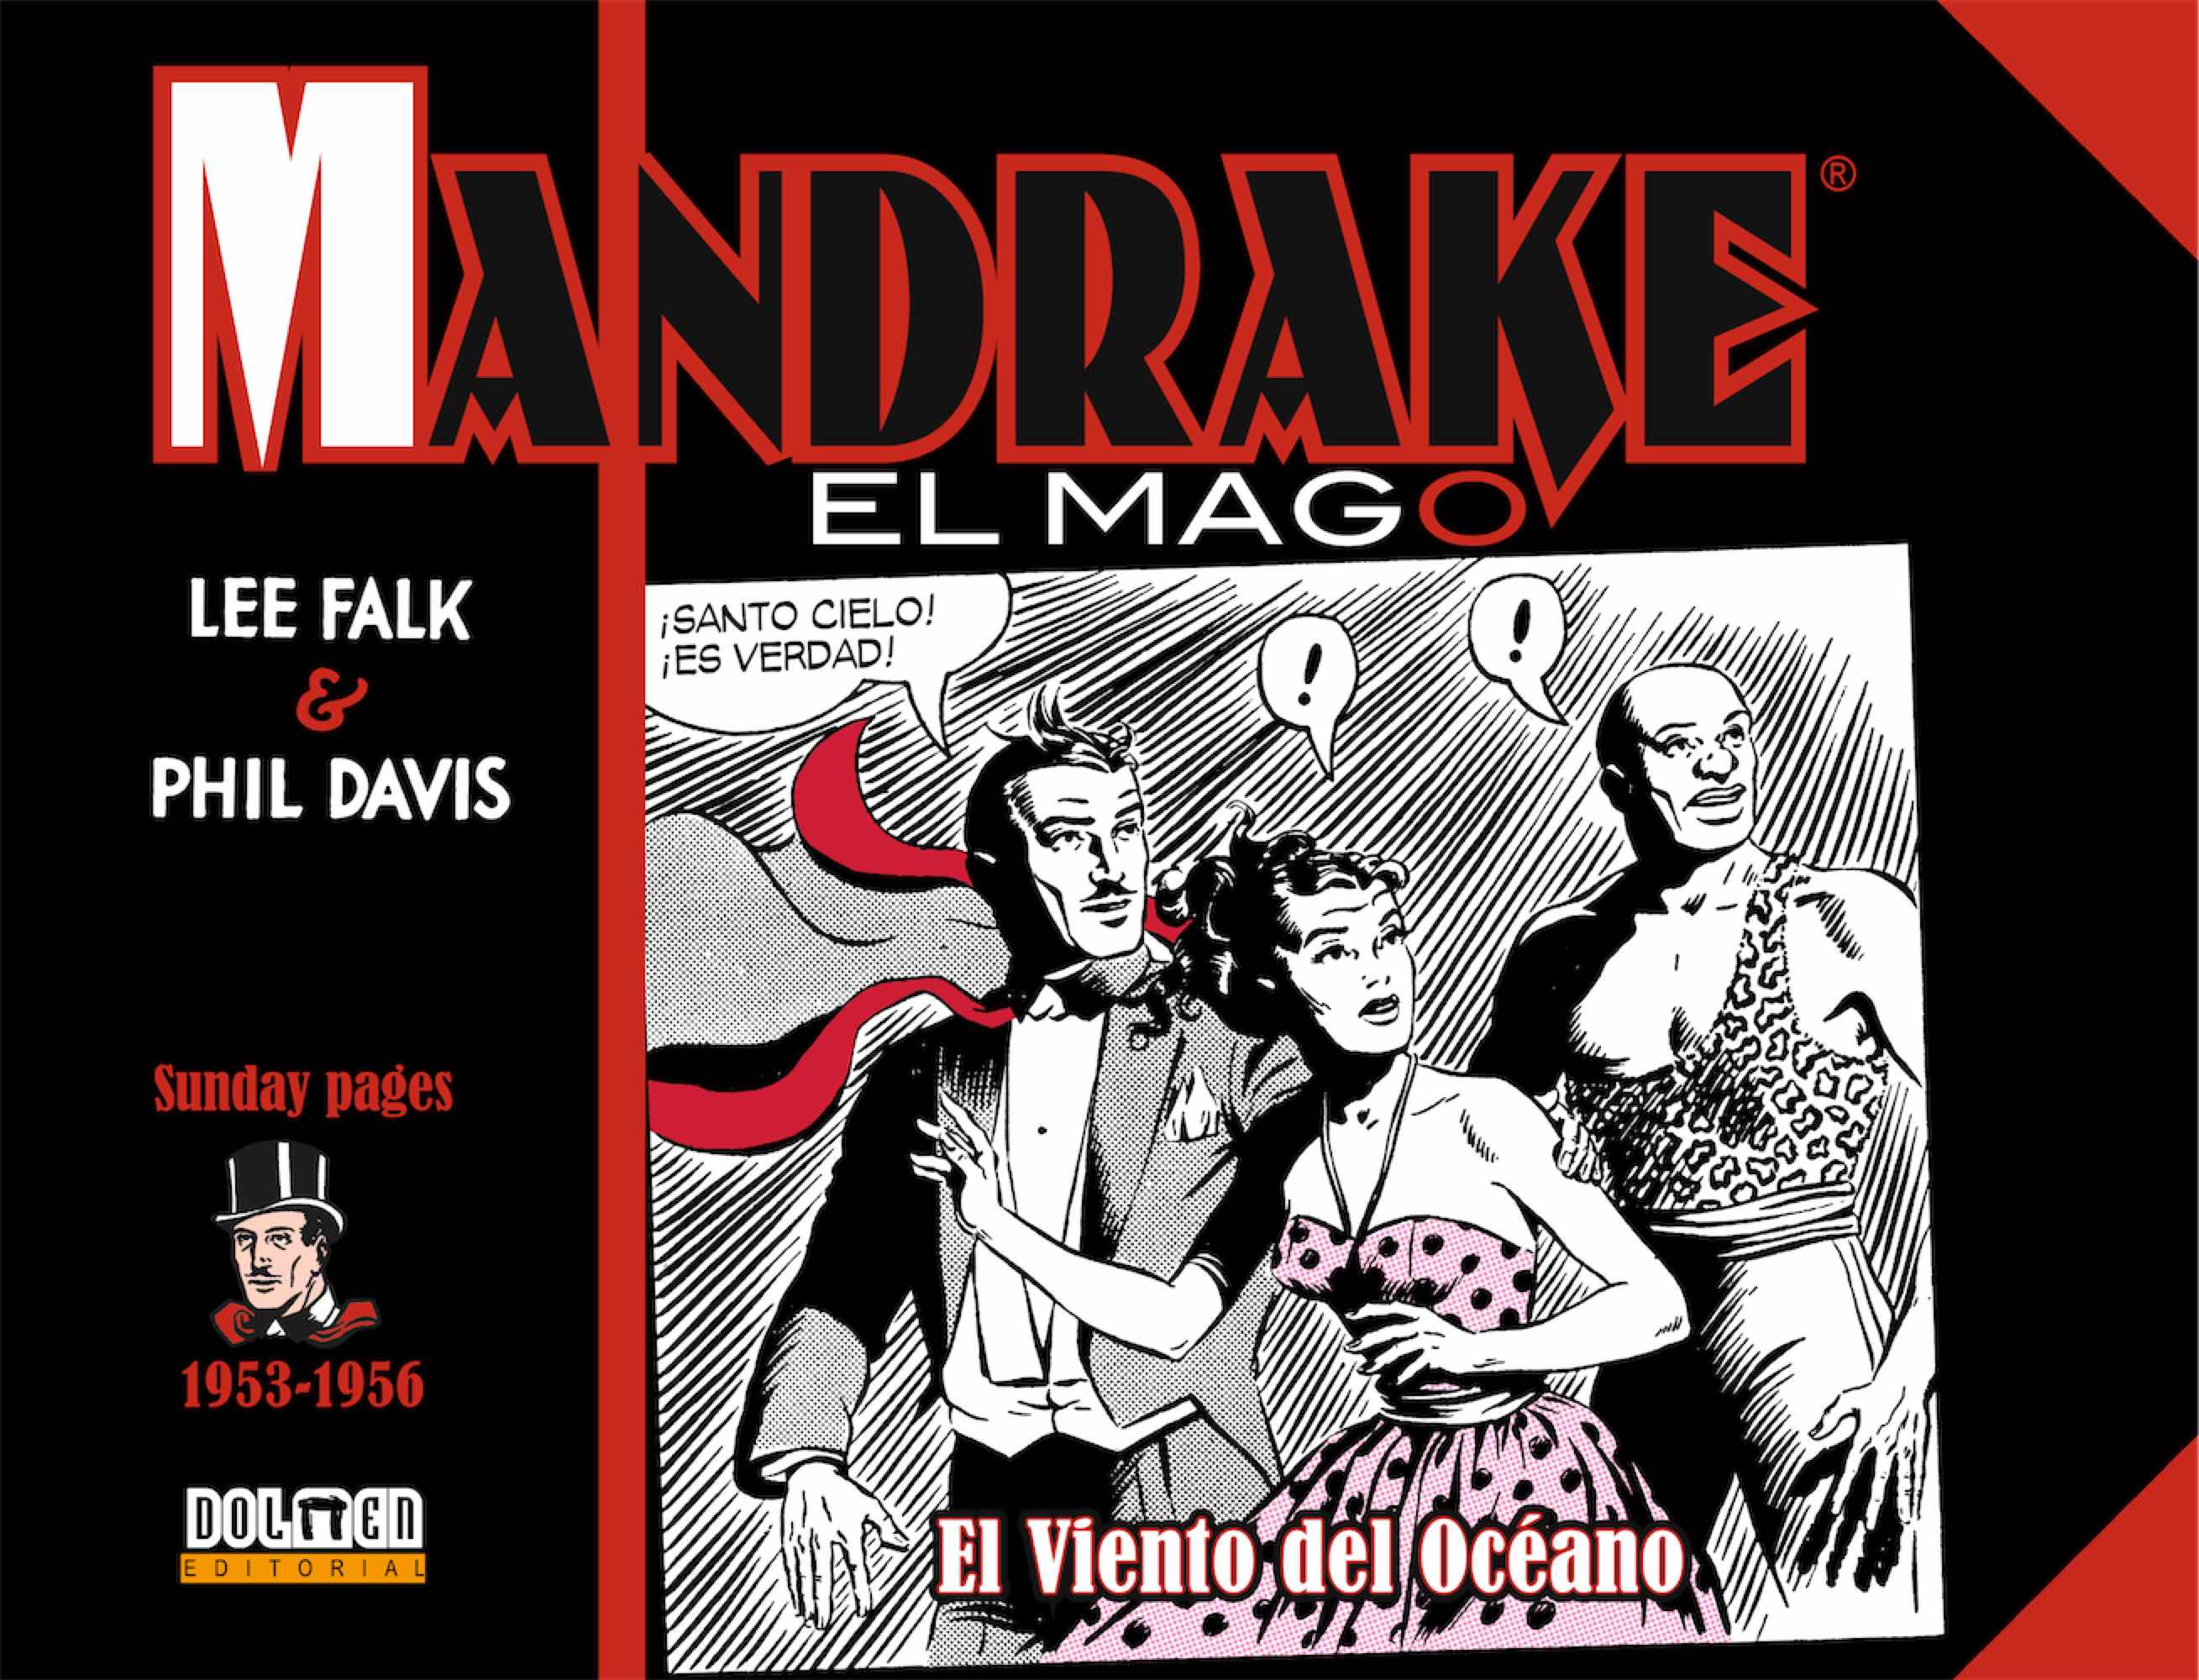 MANDRAKE EL MAGO (1953-1956 SUNDAY PAGES)